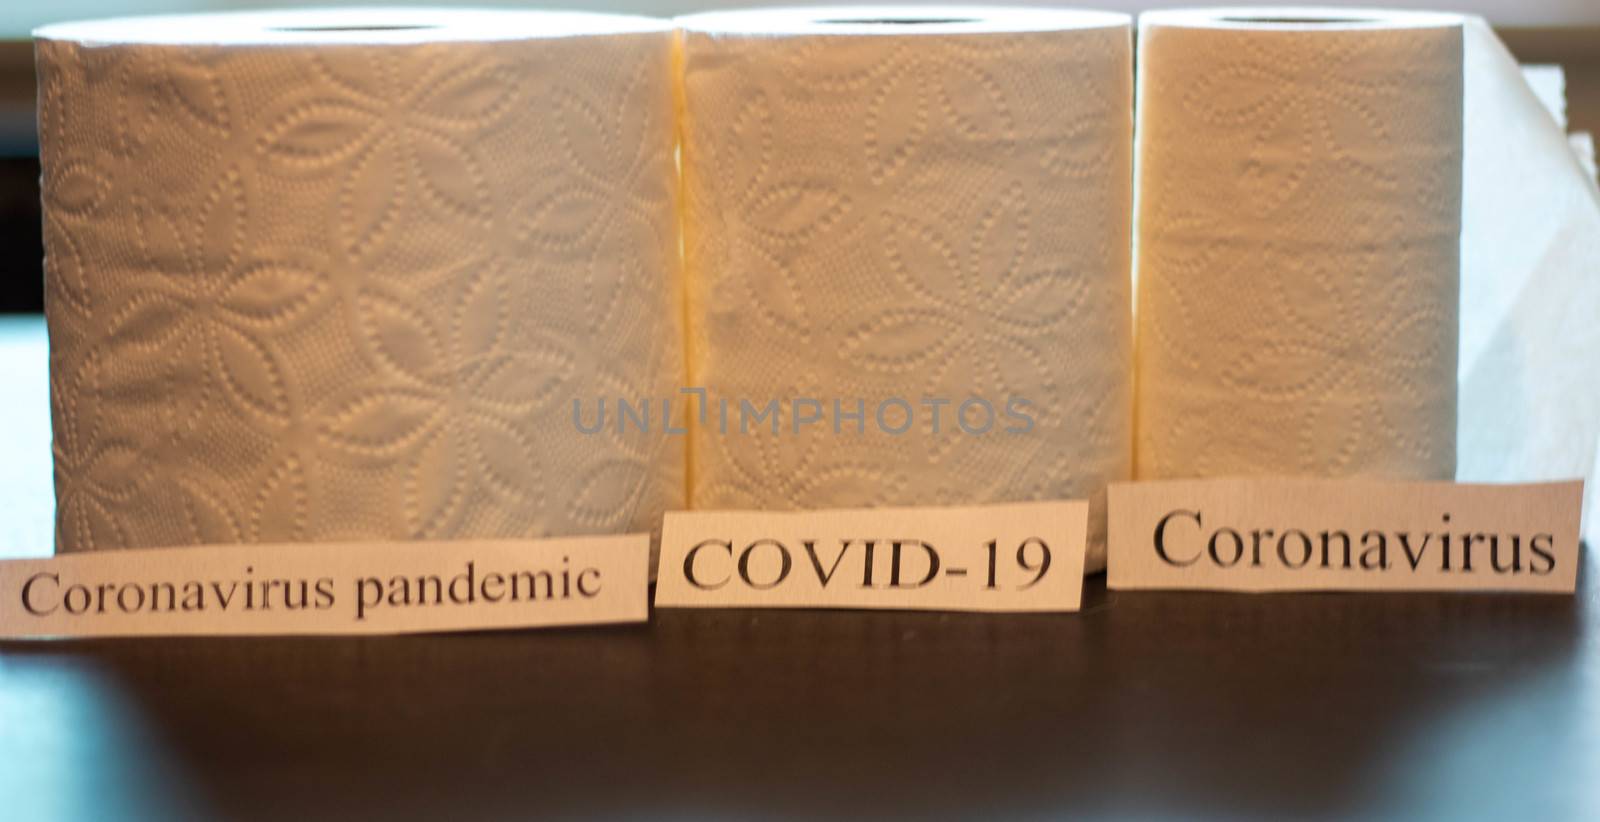 Coronavirus next to rolls of toilet paper. Theme of stocking up on supplies.